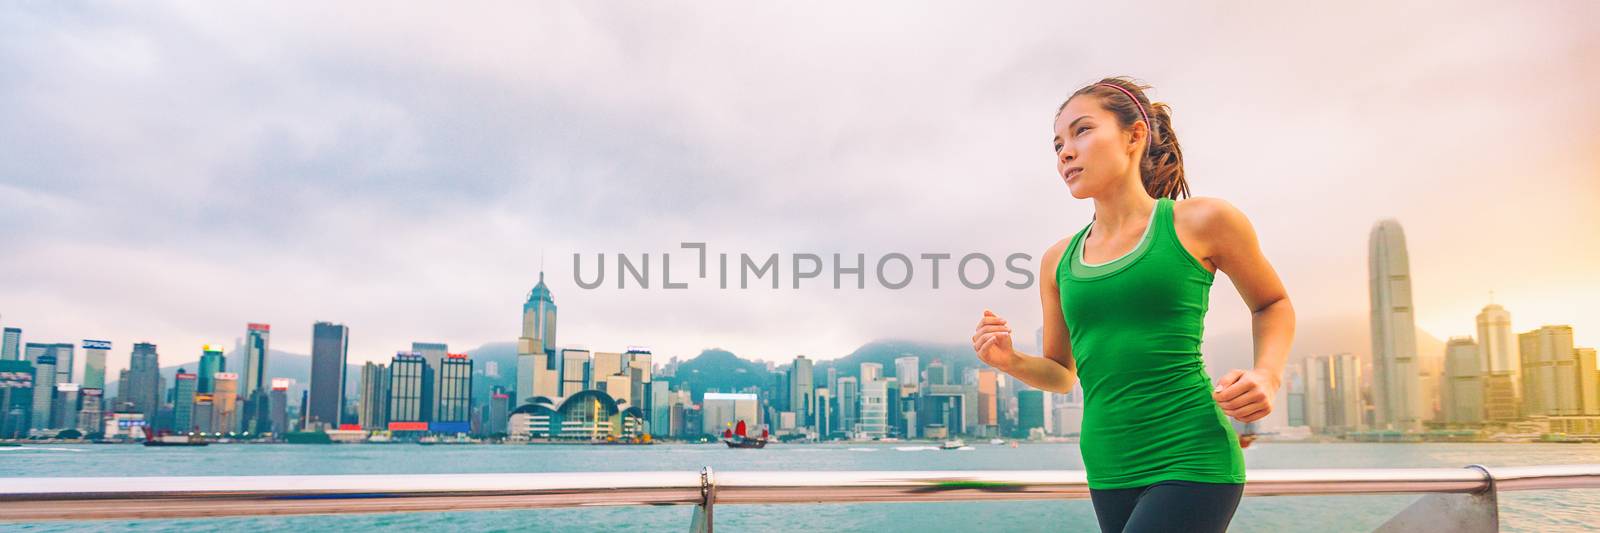 Hong Kong city China travel sightseeing fitness woman jogging at skyline banner panorama . Healthy active lifestyle panoramic view of urban landscape by Maridav